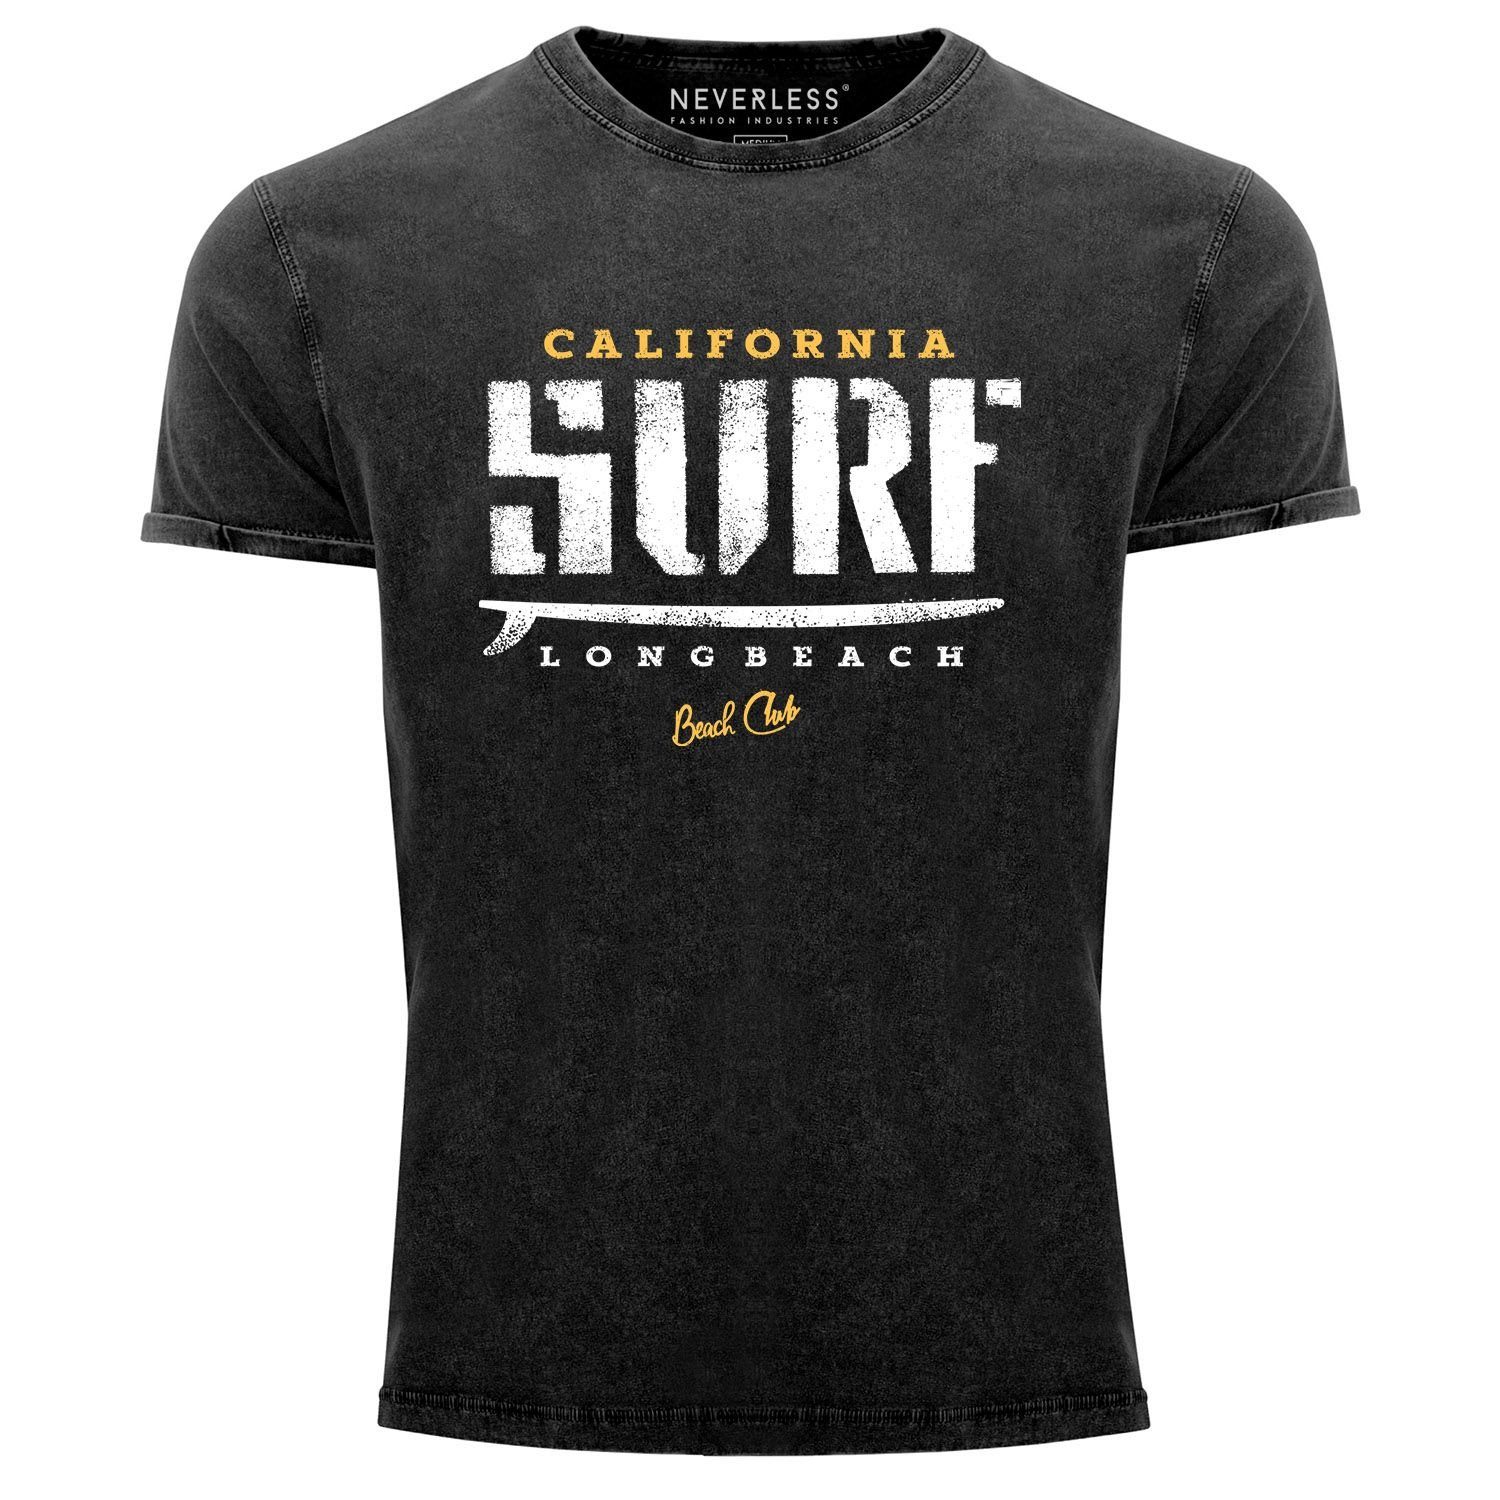 Neverless Print-Shirt Cooles Angesagtes Herren T-Shirt Vintage Shirt California Surf Aufdruck Used Look Slim Fit Neverless® mit Print schwarz